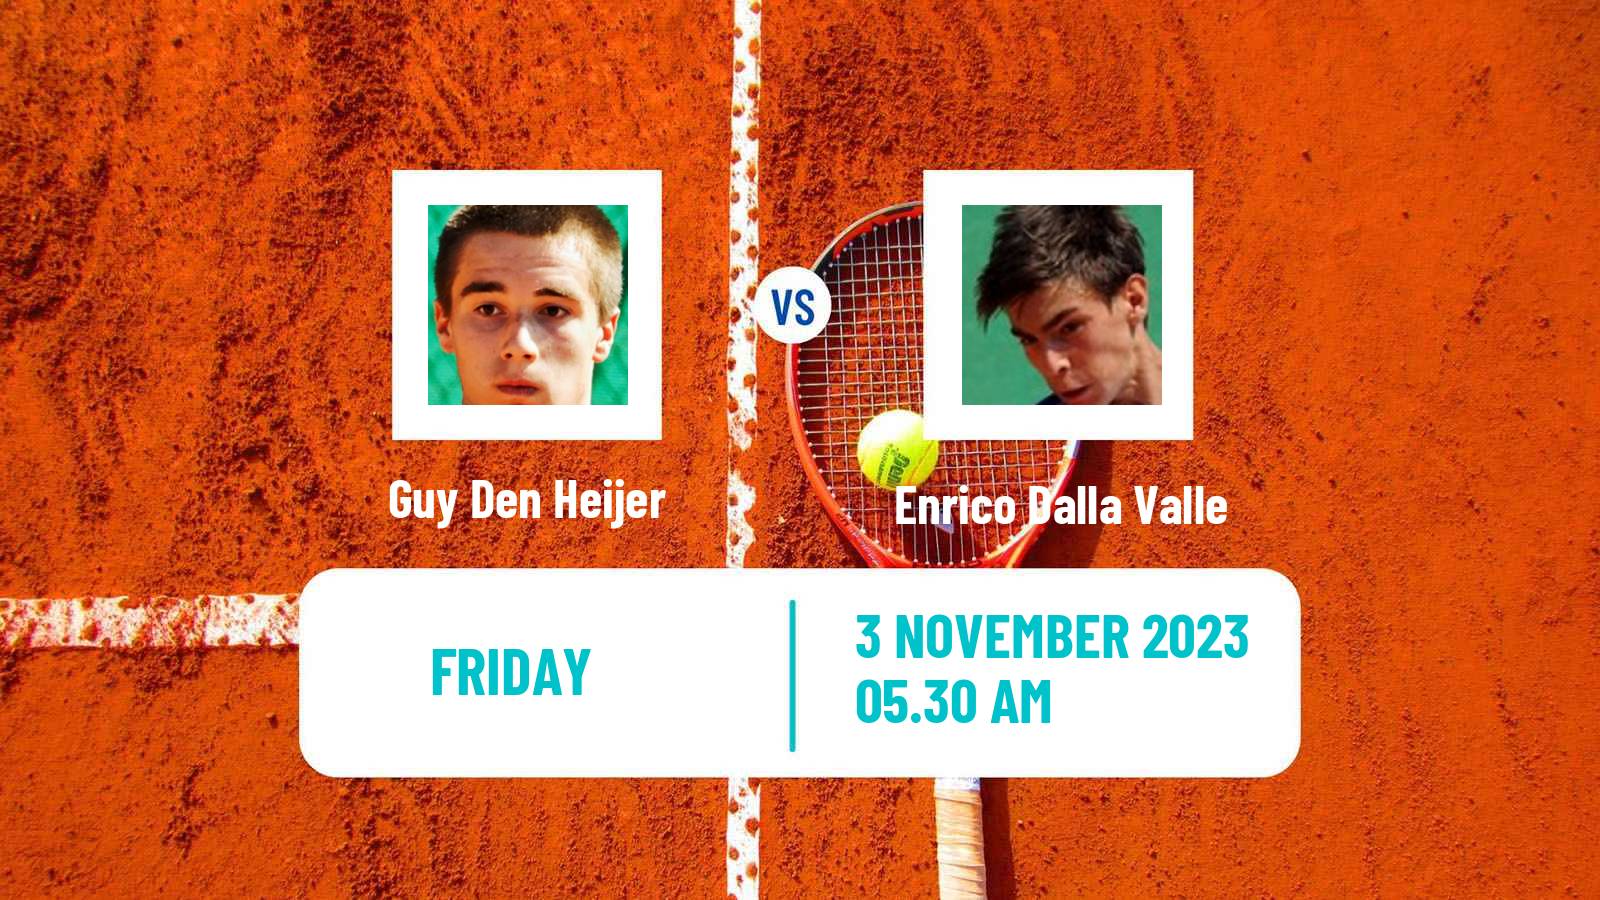 Tennis ITF M25 Heraklion Men Guy Den Heijer - Enrico Dalla Valle